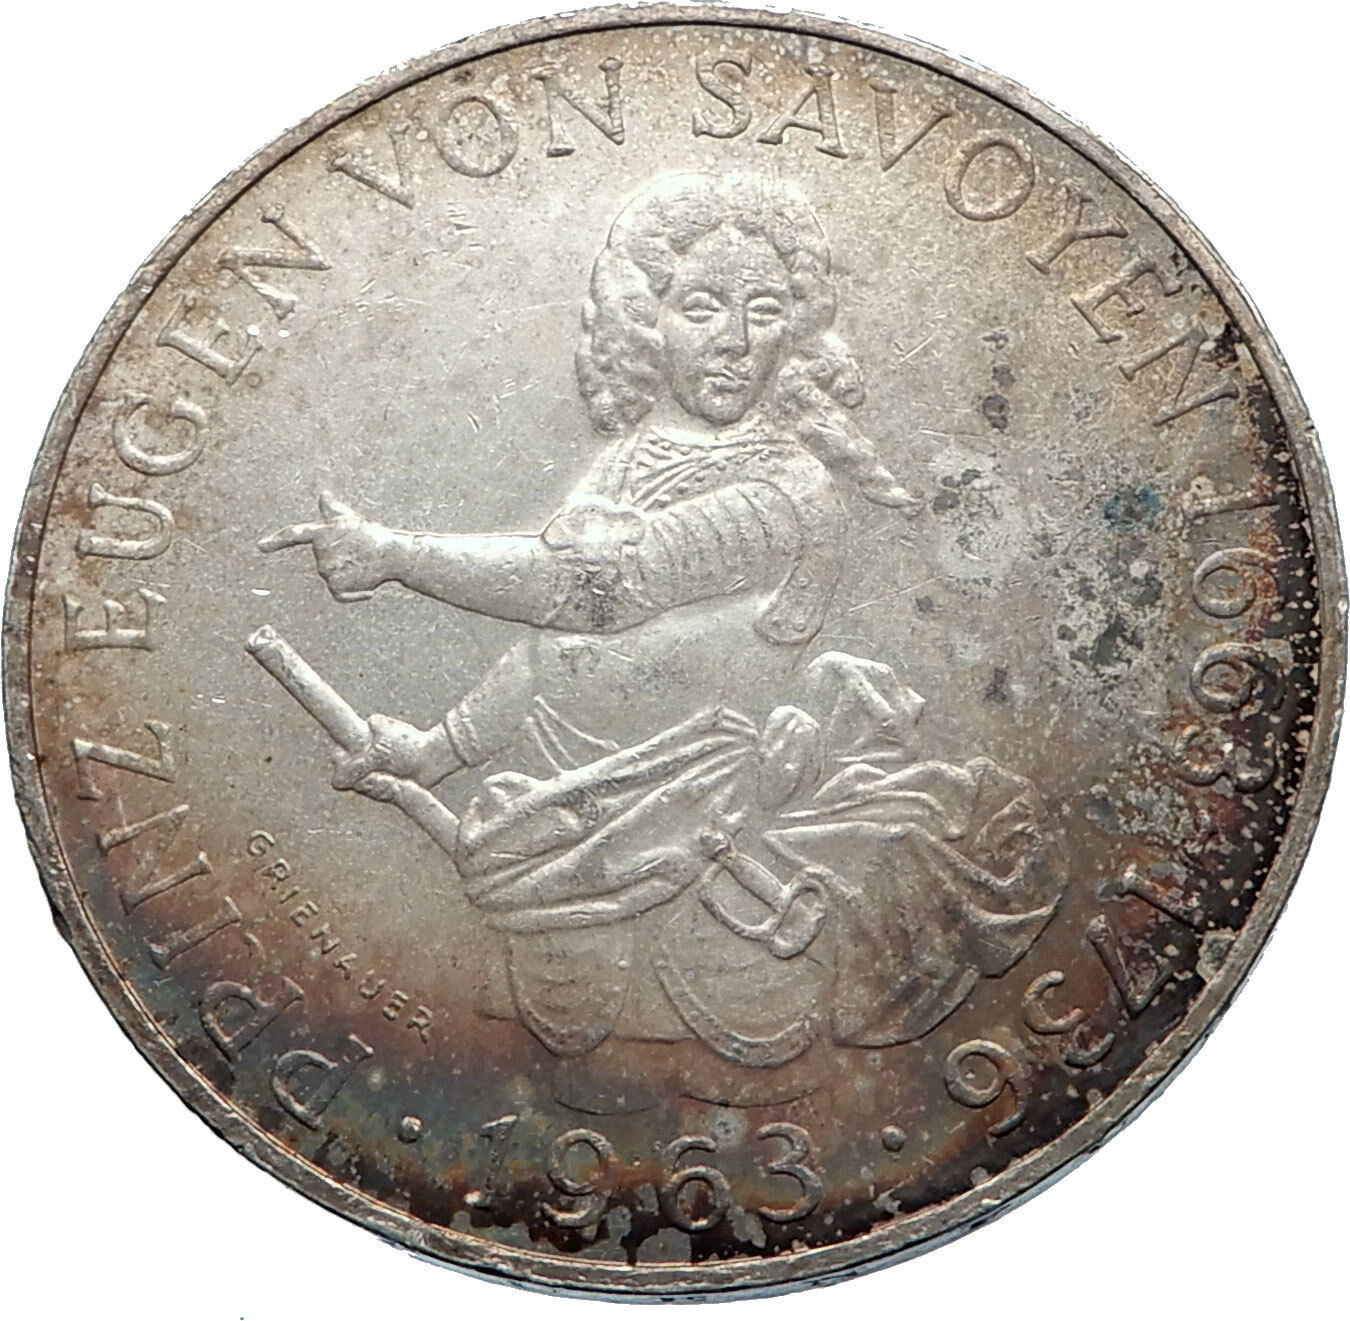 1963 AUSTRIA with Prince Eugen Antique Silver 25 Schilling Austrian Coin i72014